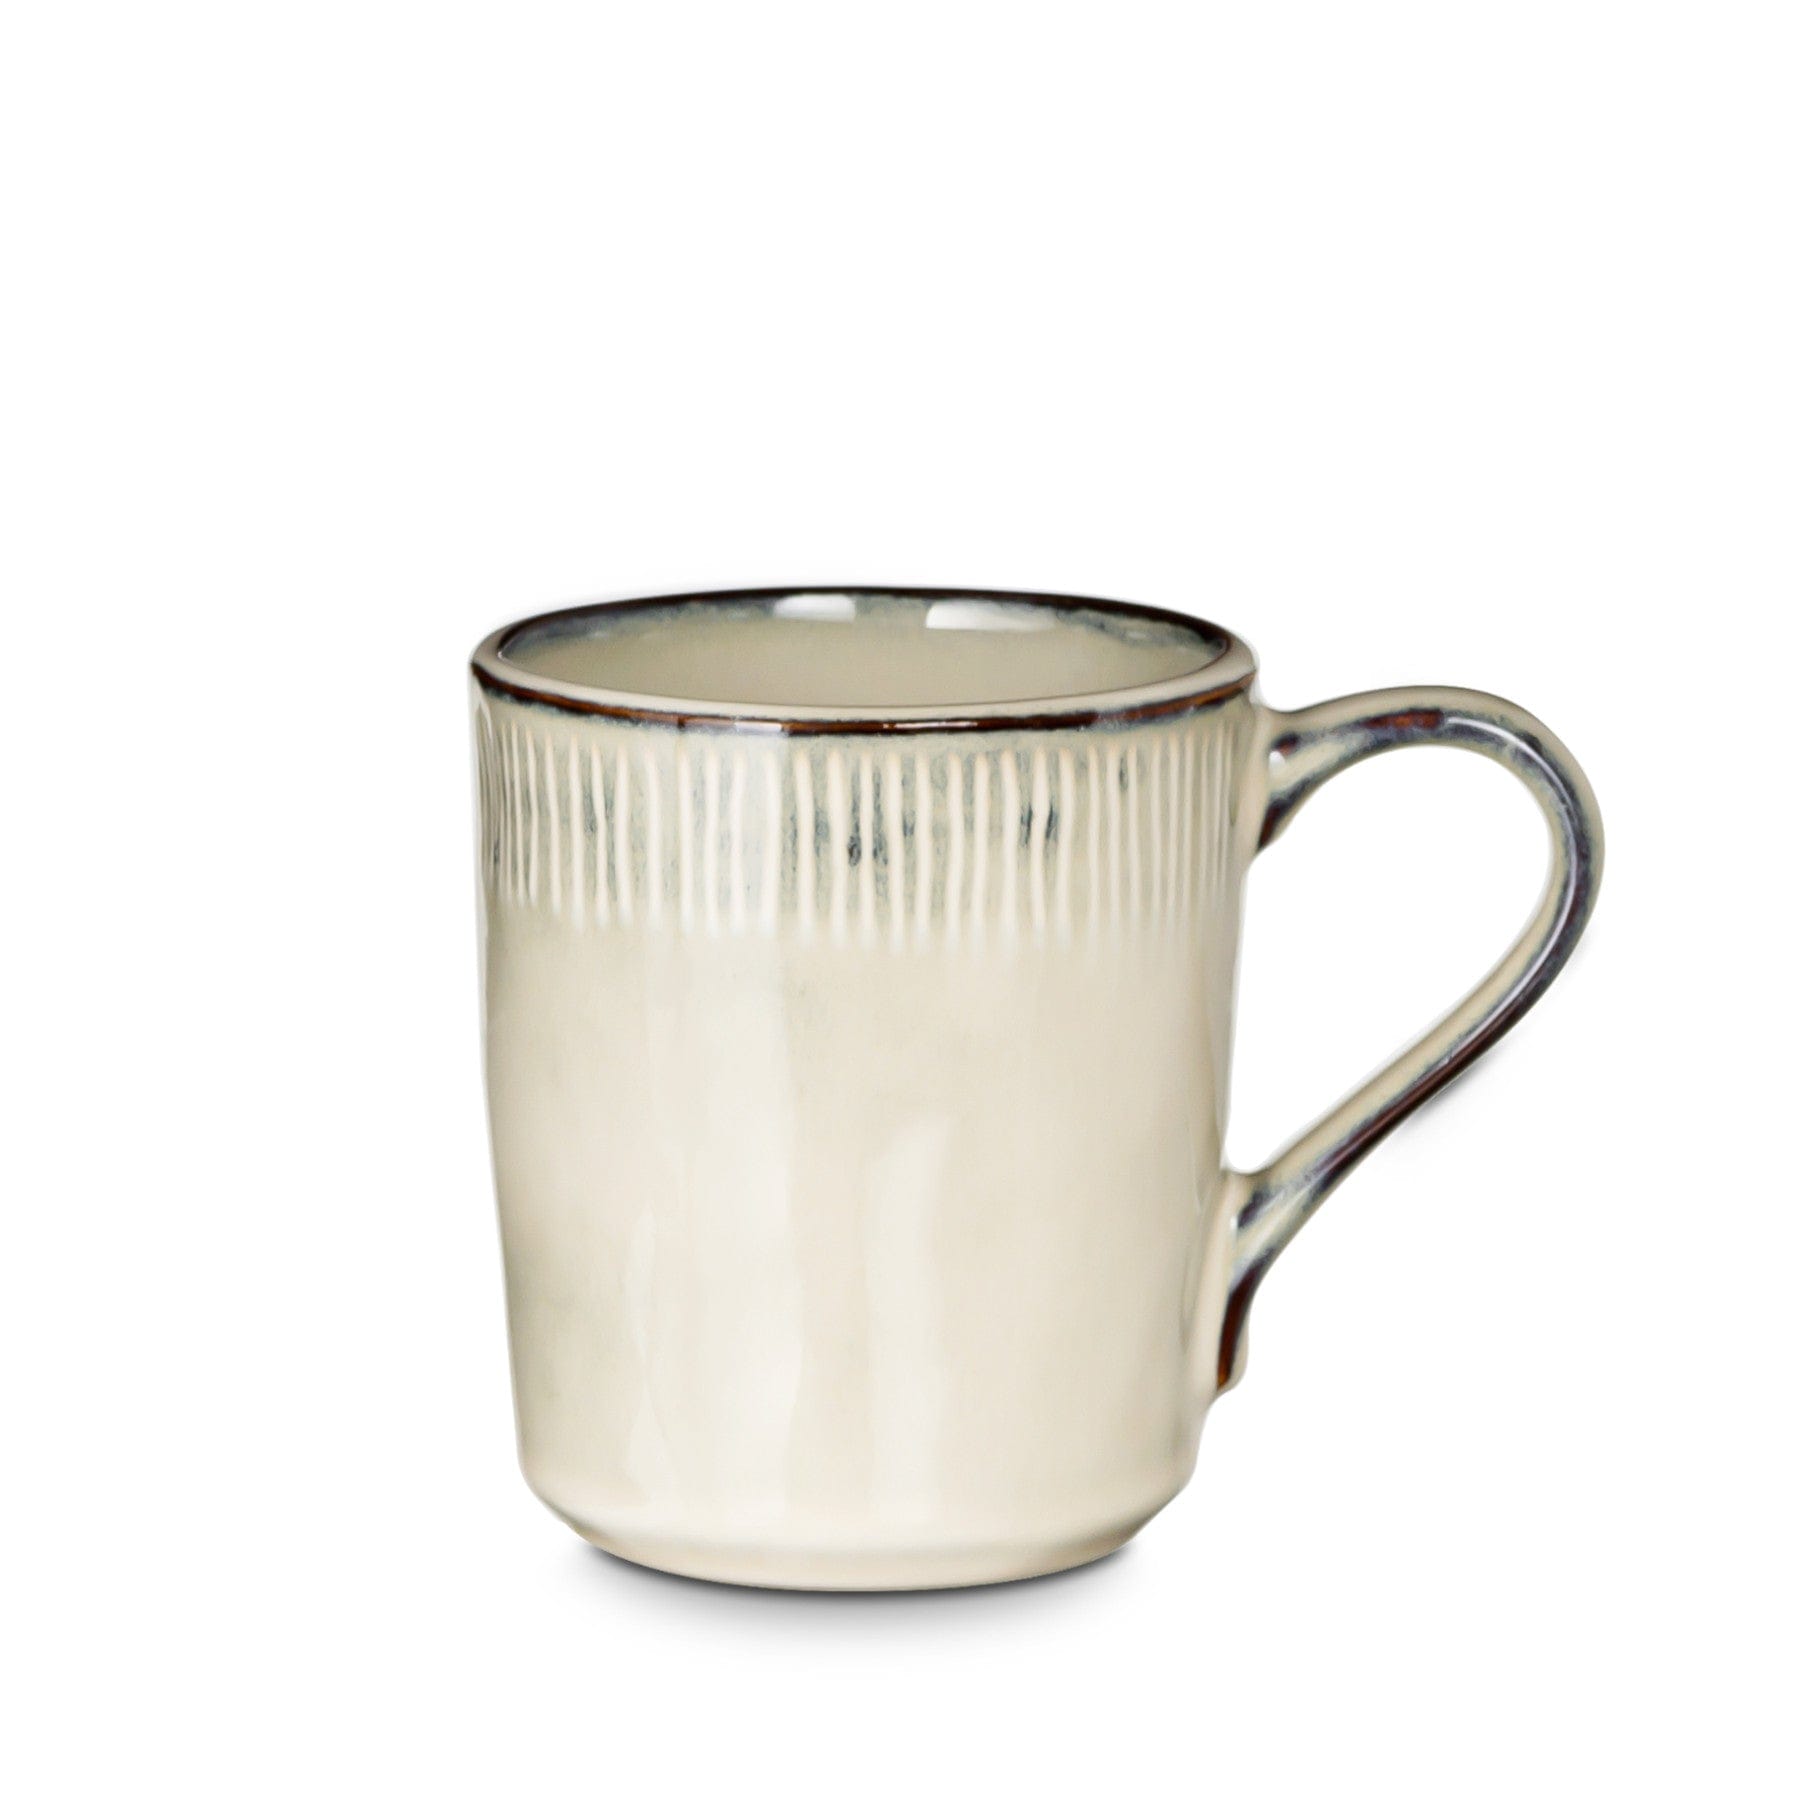 White ceramic coffee mug with handle on white background